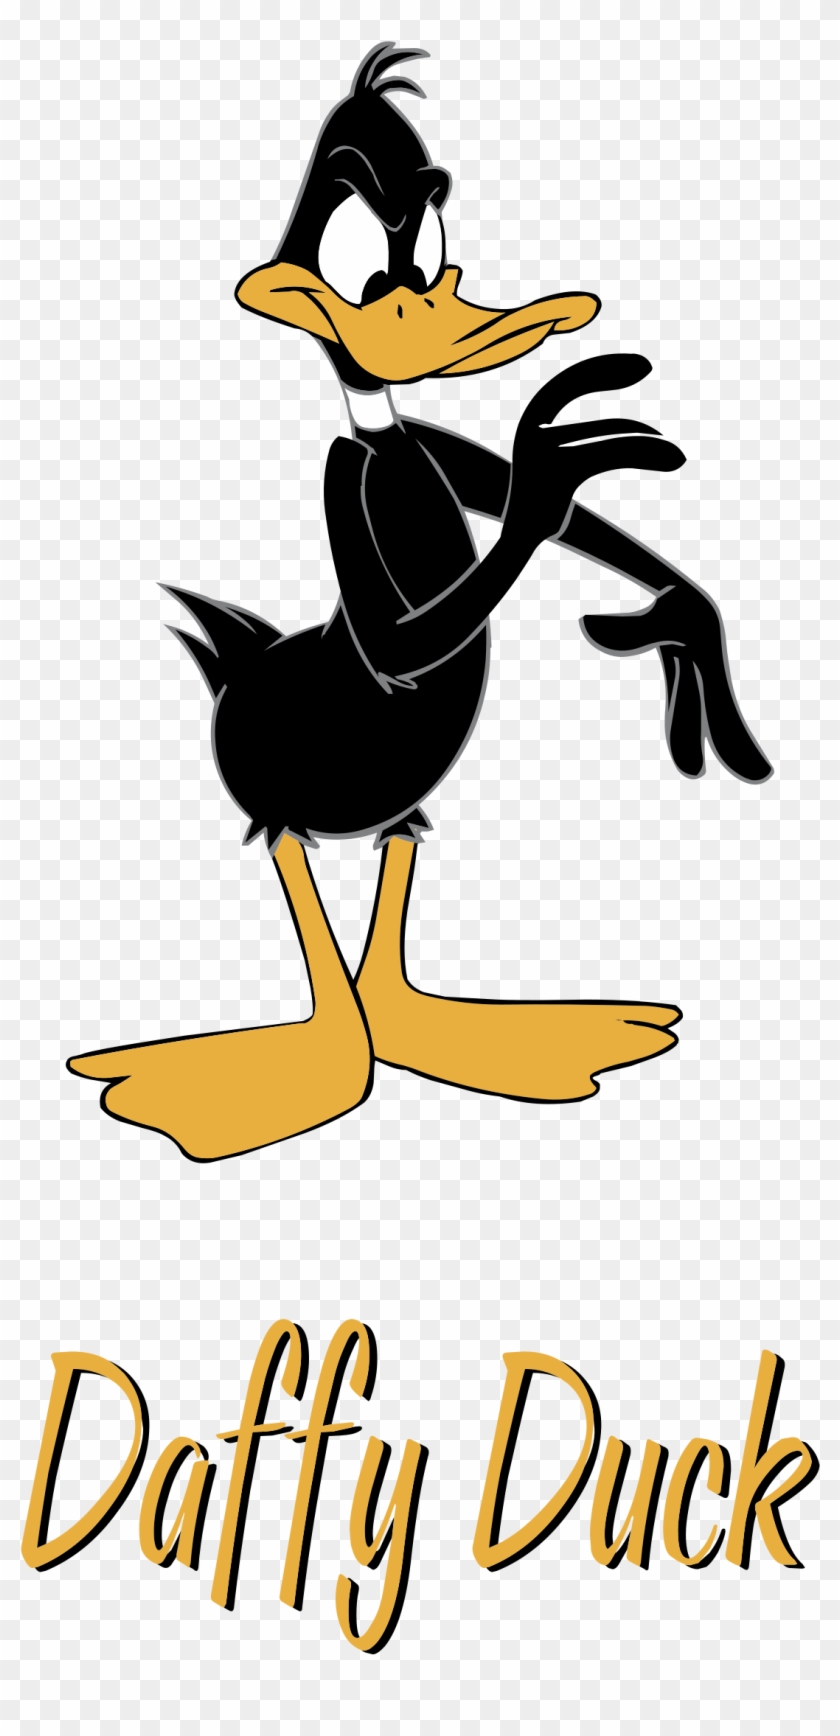 Daffy Duck Logo Png Transparent - Daffy Duck #285875